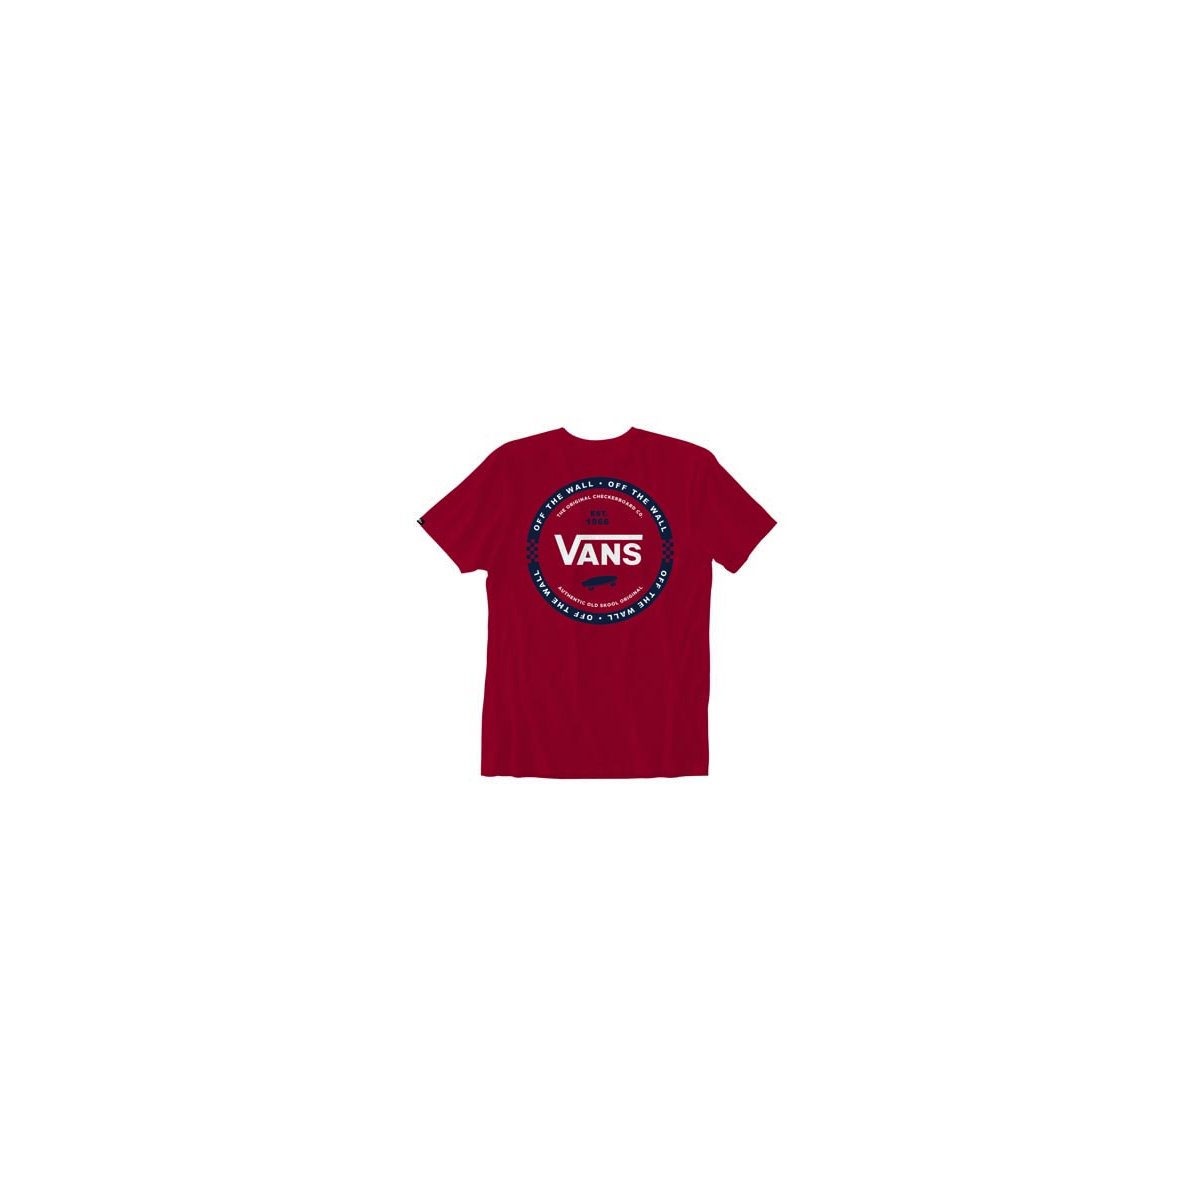 Vans Logo Check Kids T-Shirt 21,95 - SantoLoco, €